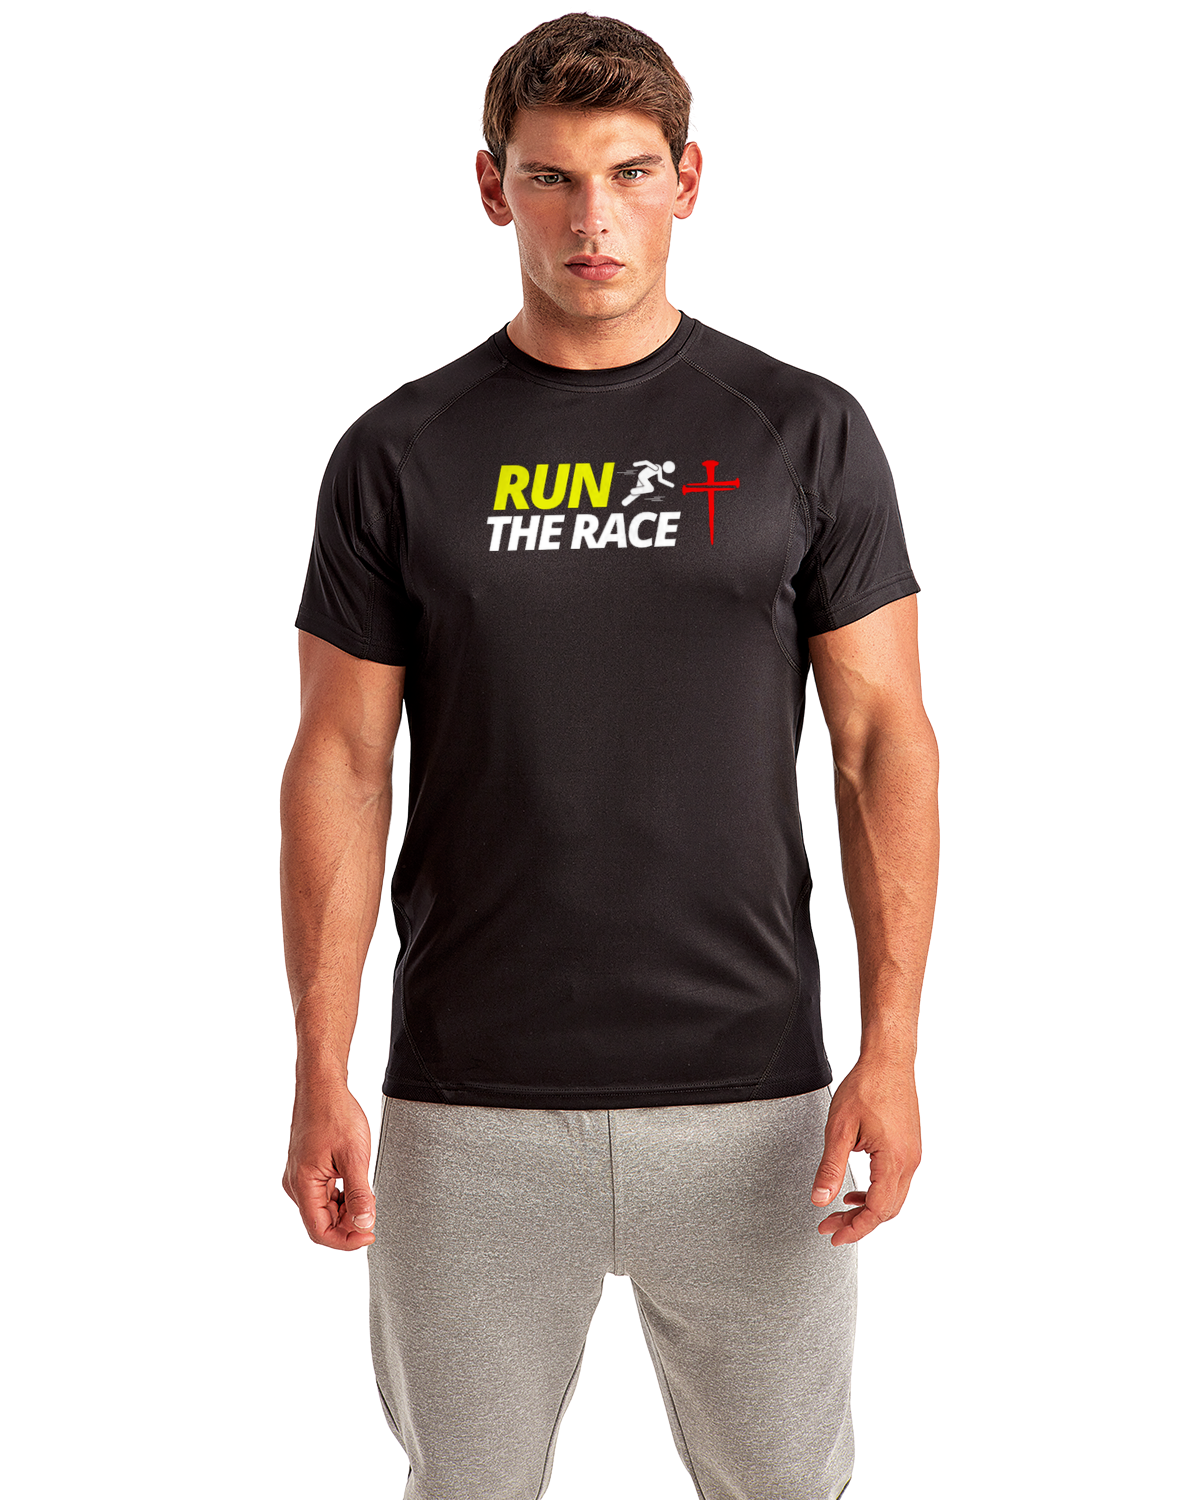 Run the Race Men's Dri-fit